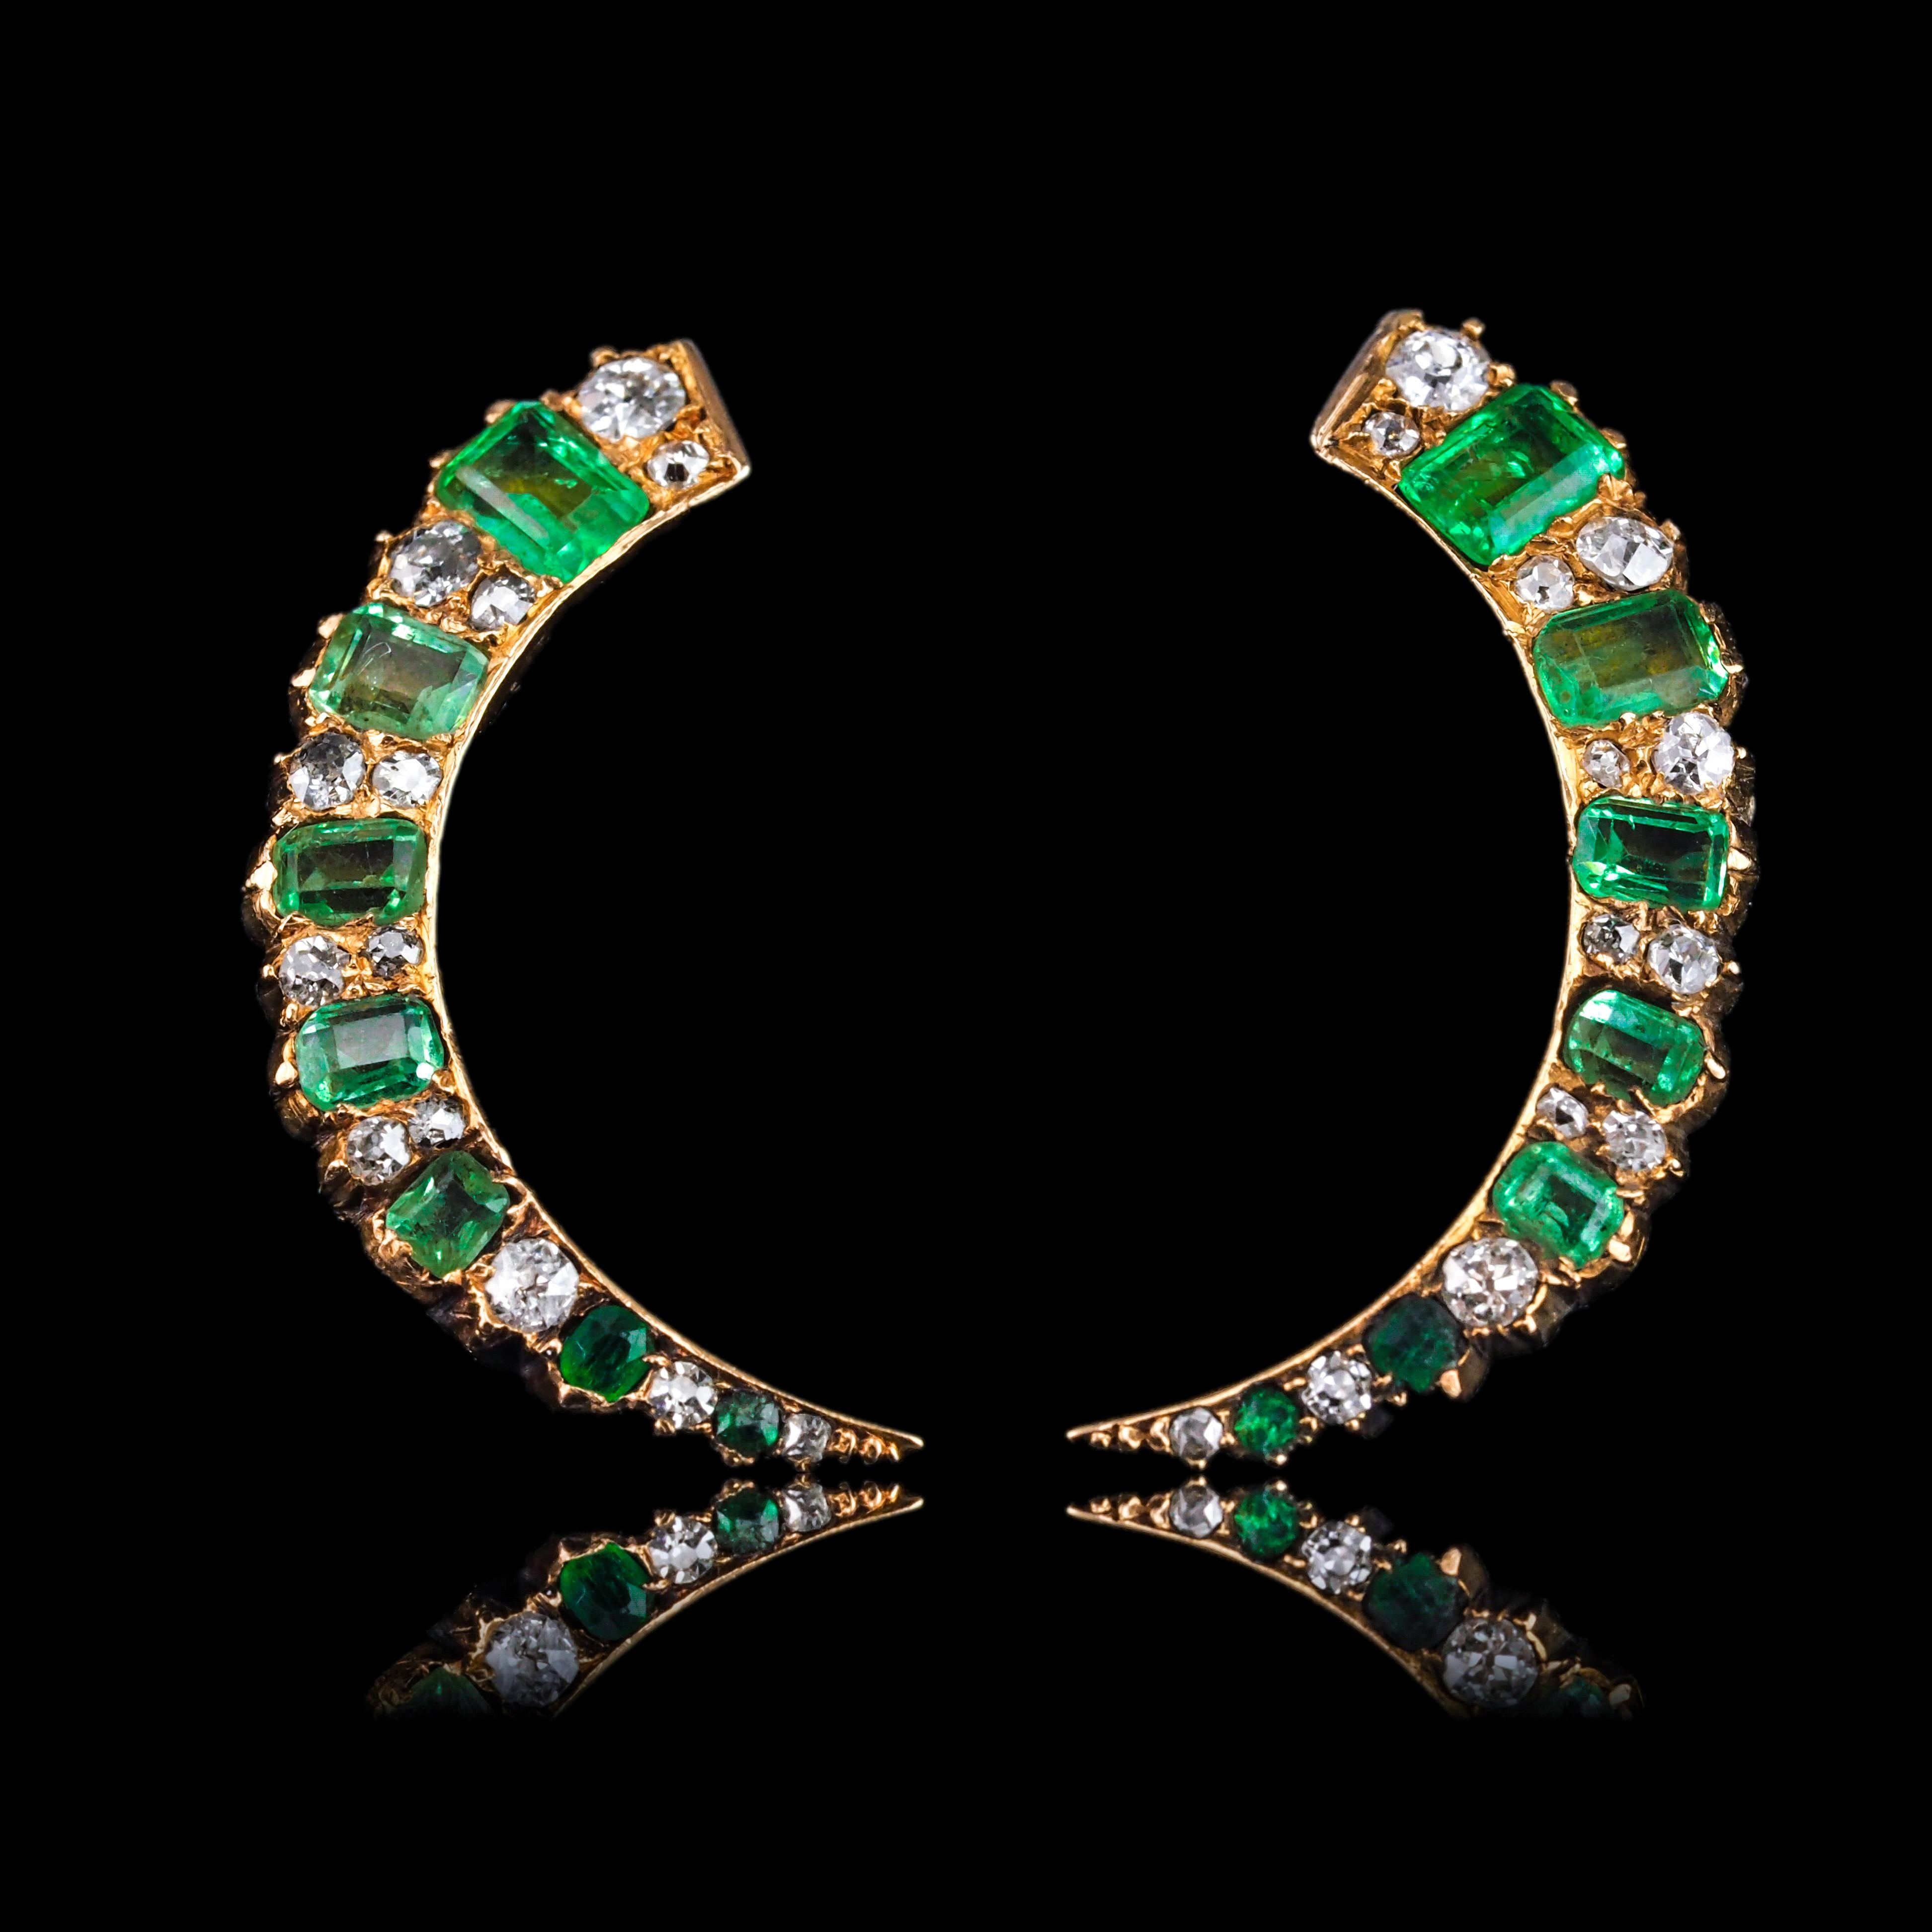 Antique Victorian Emerald & Diamond Earrings 18K Gold Crescent Design - c.1890 For Sale 4